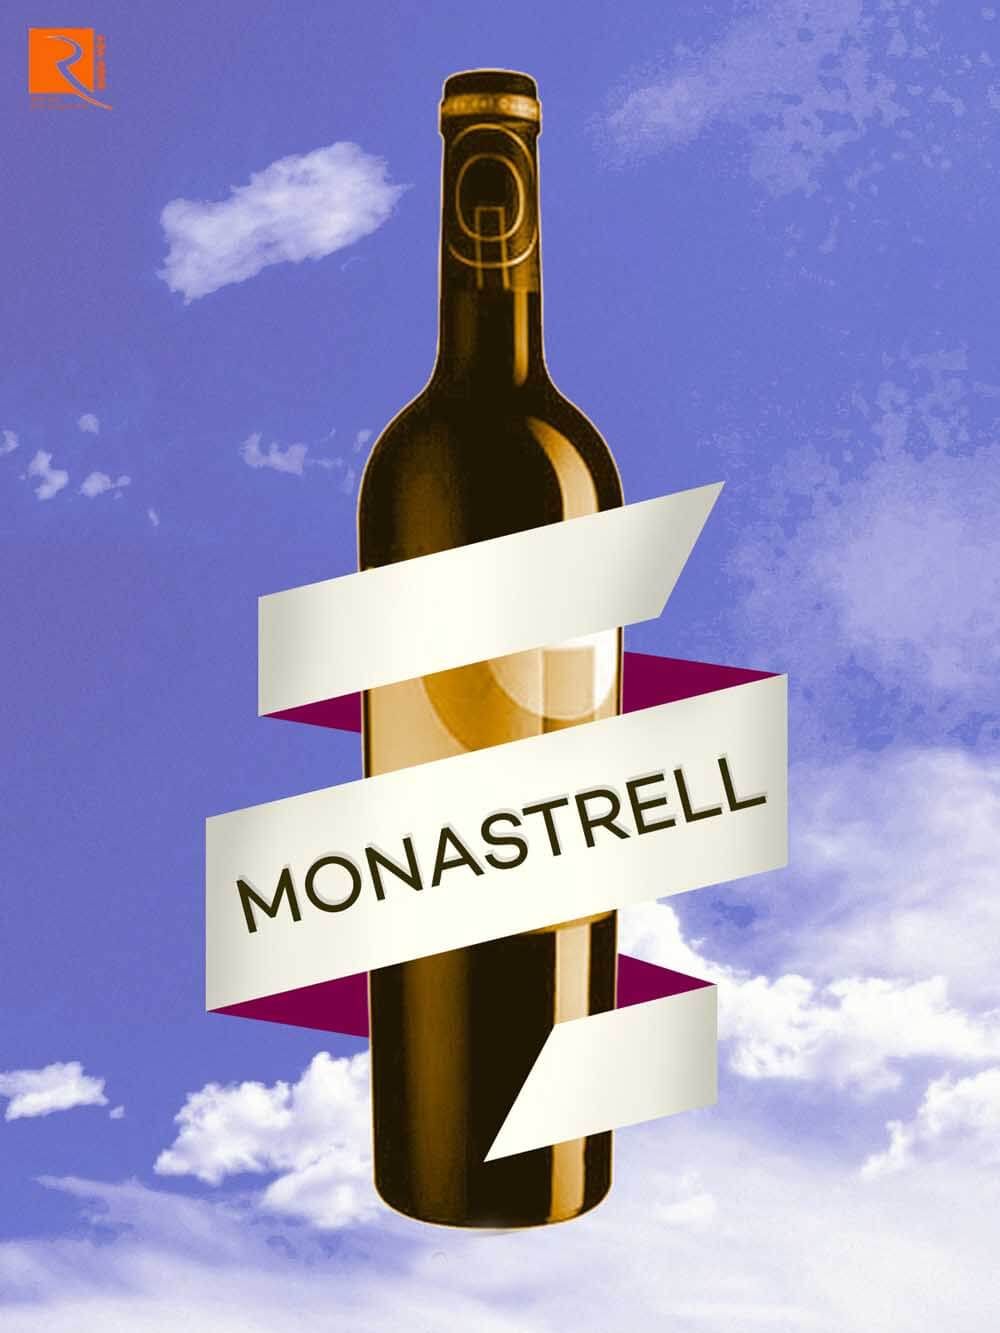 Monastrell